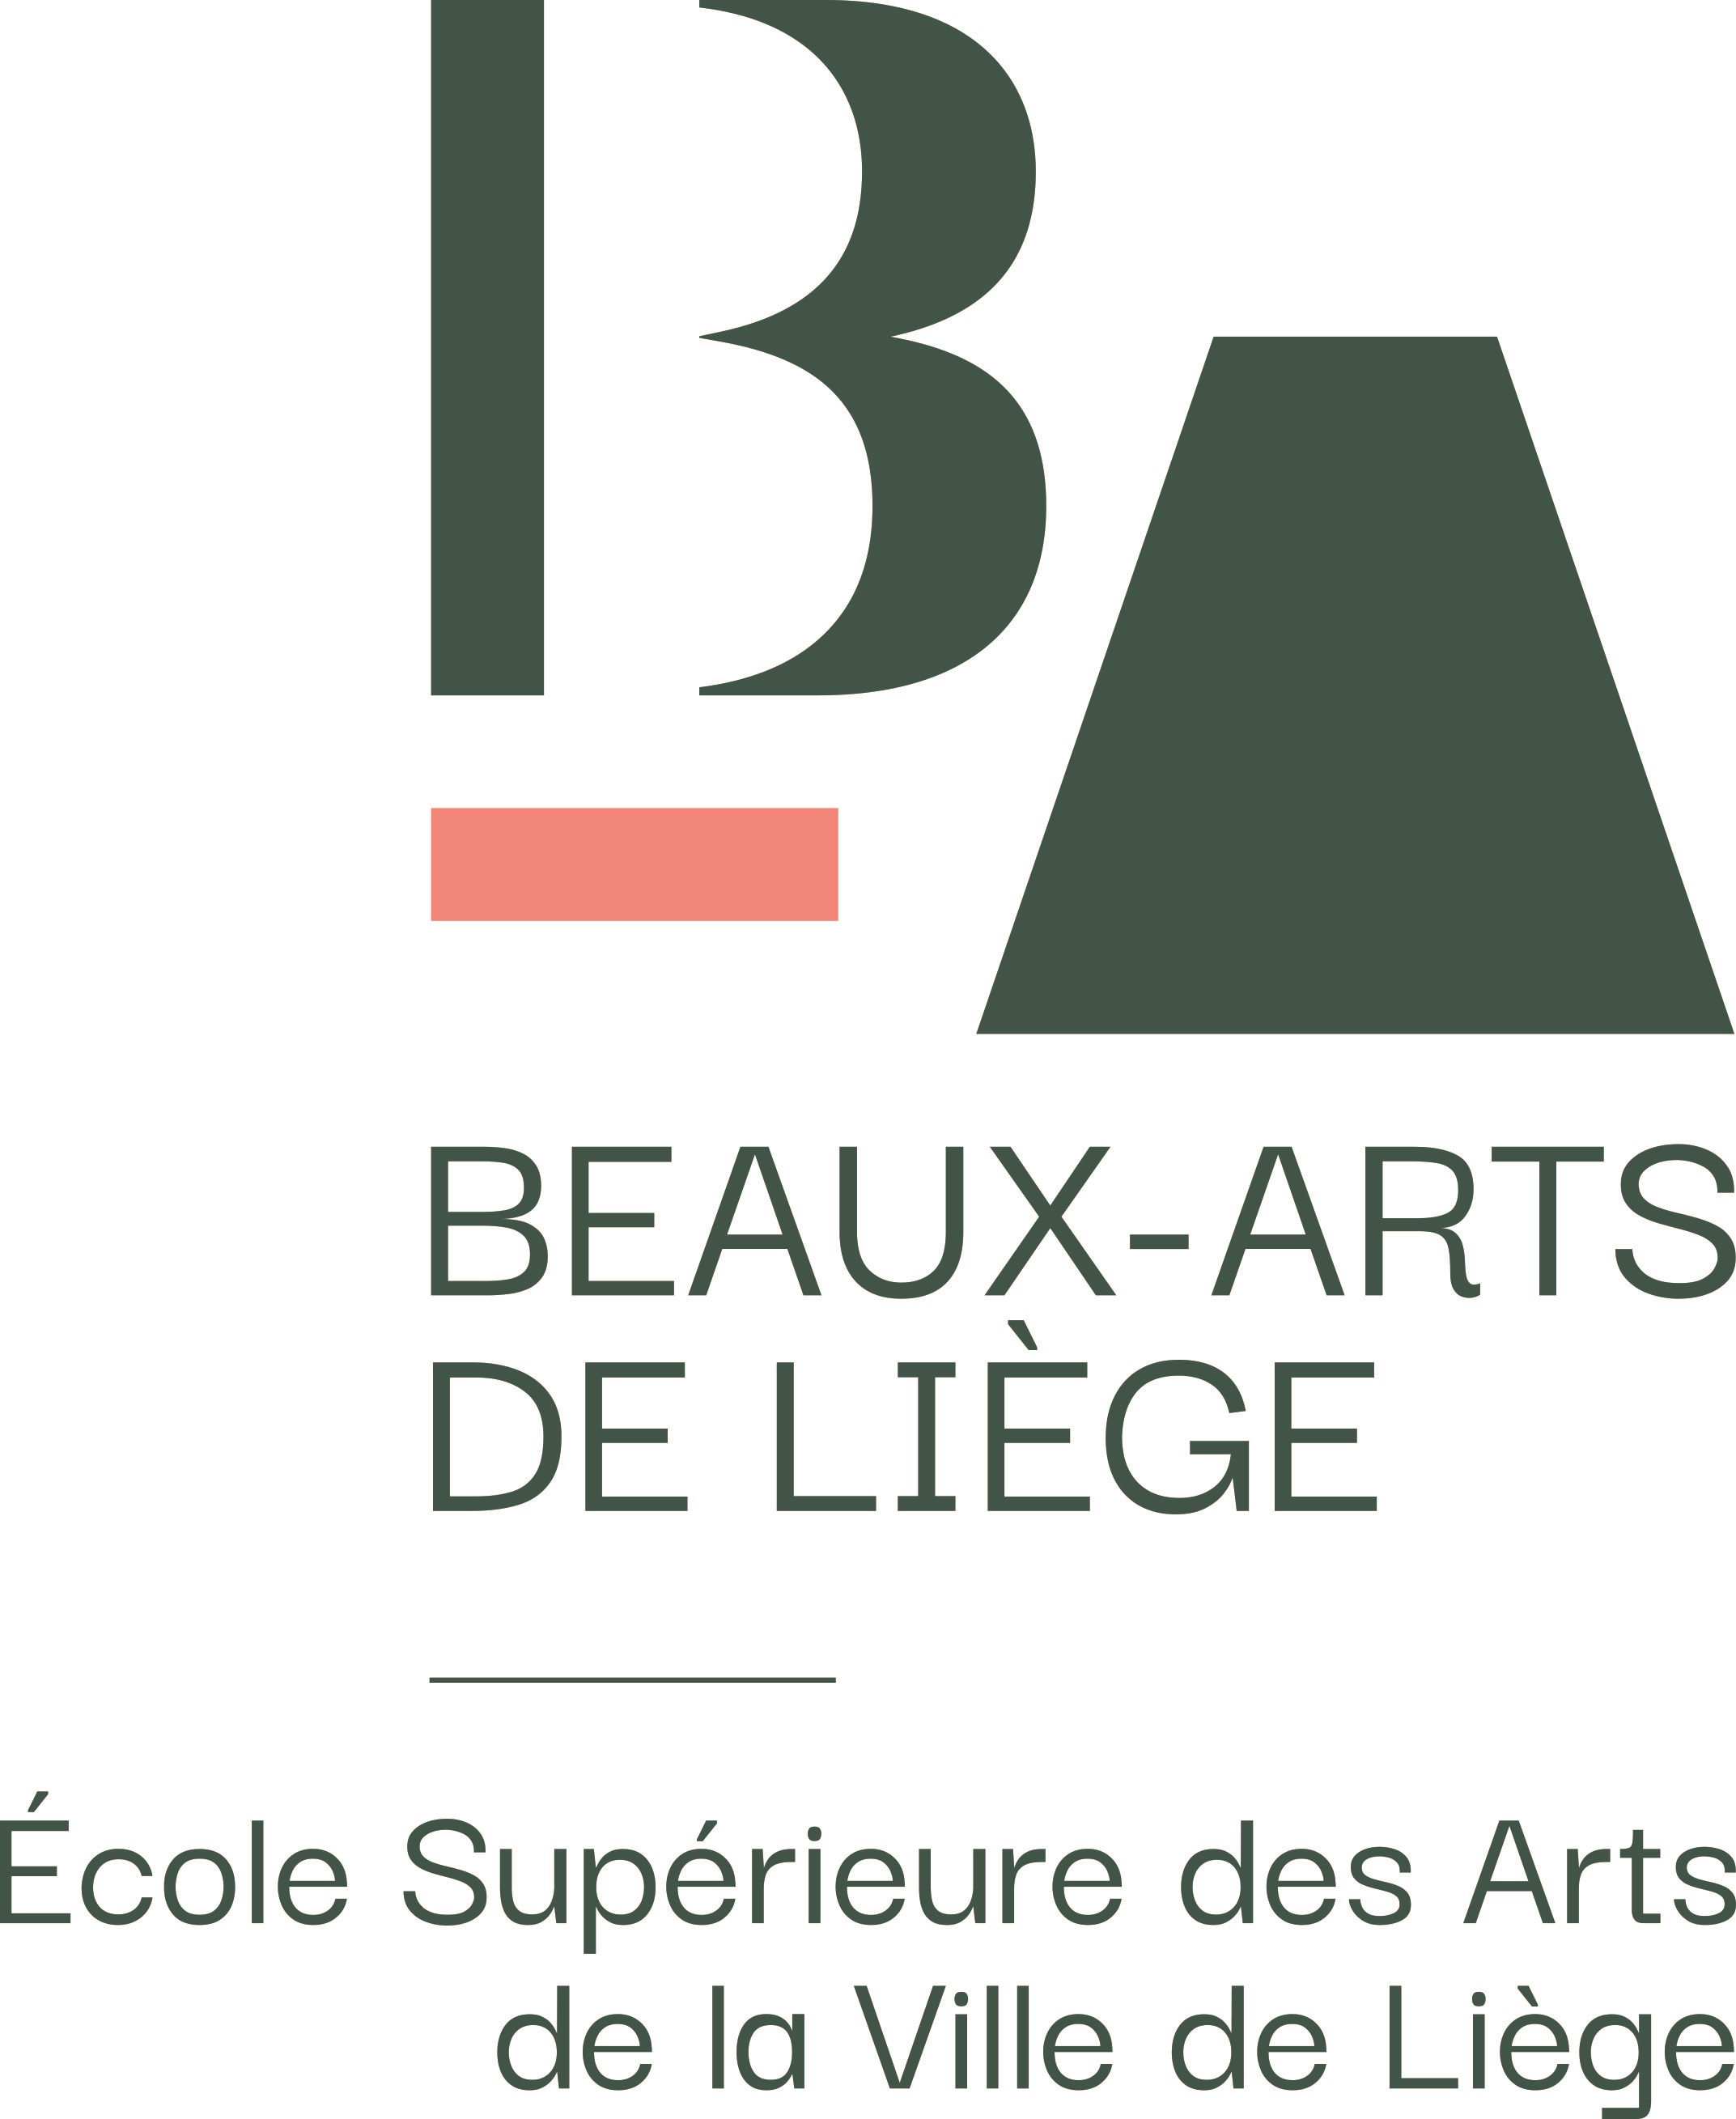 Beaux-Arts de Liège